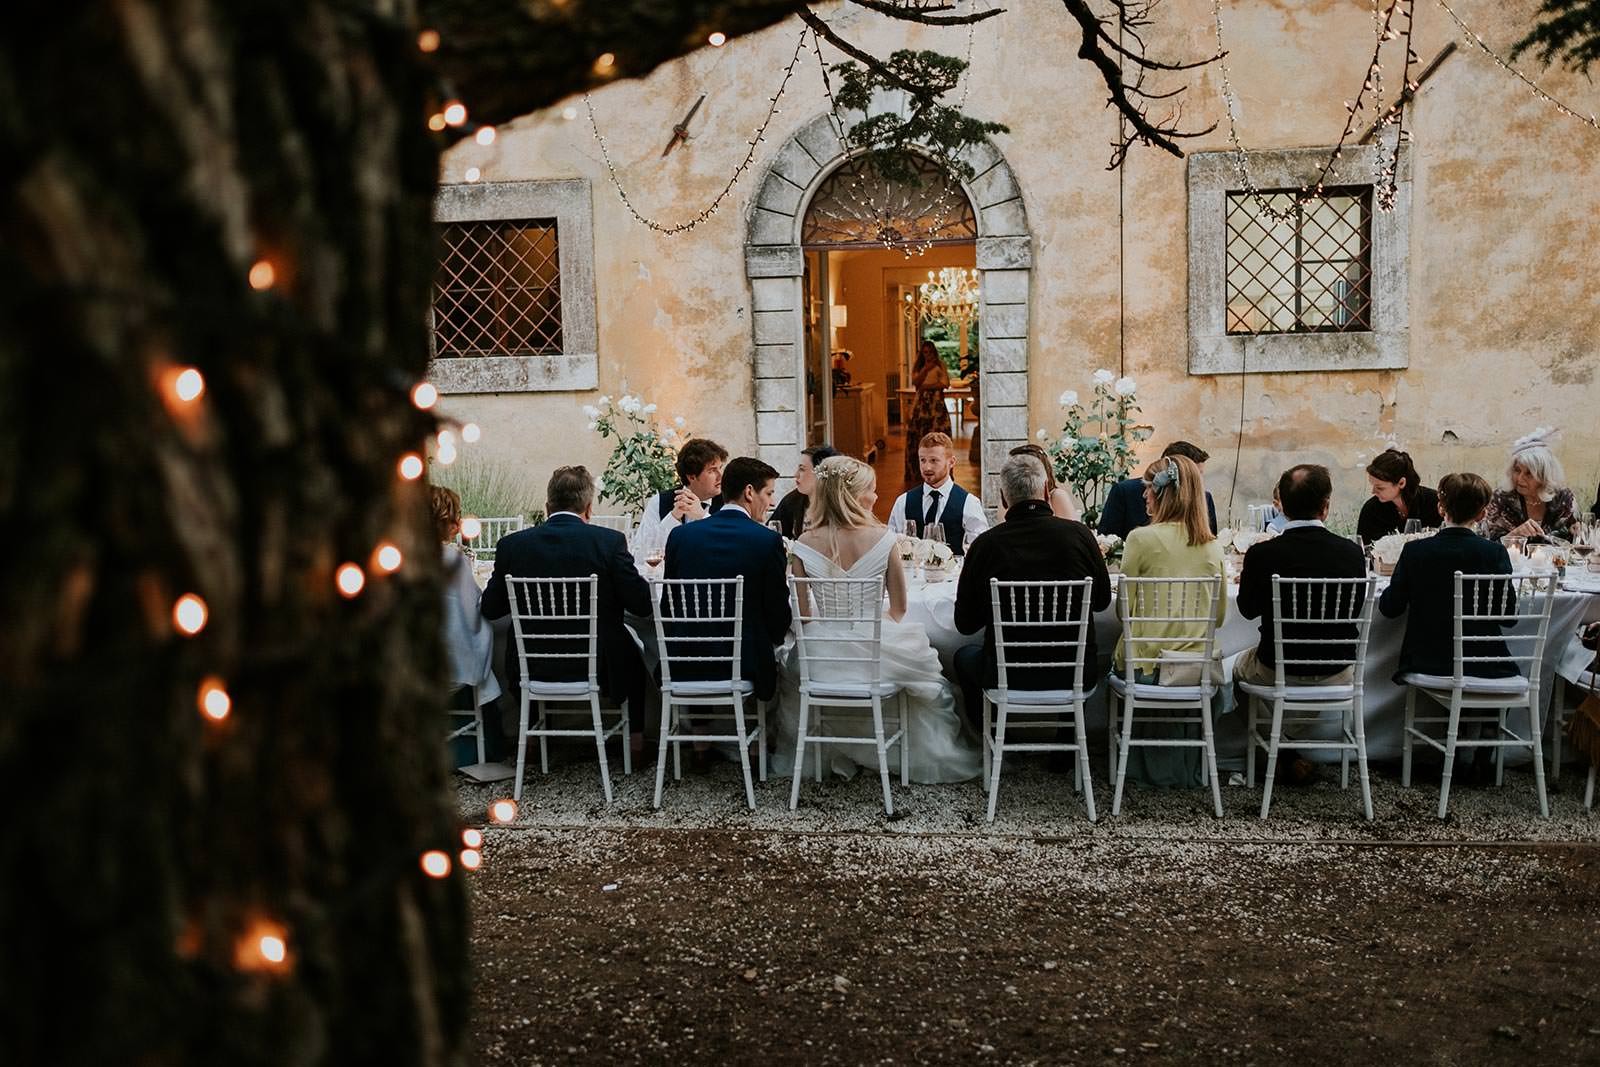 Reception - Wedding Reception in Volterra, Tuscany